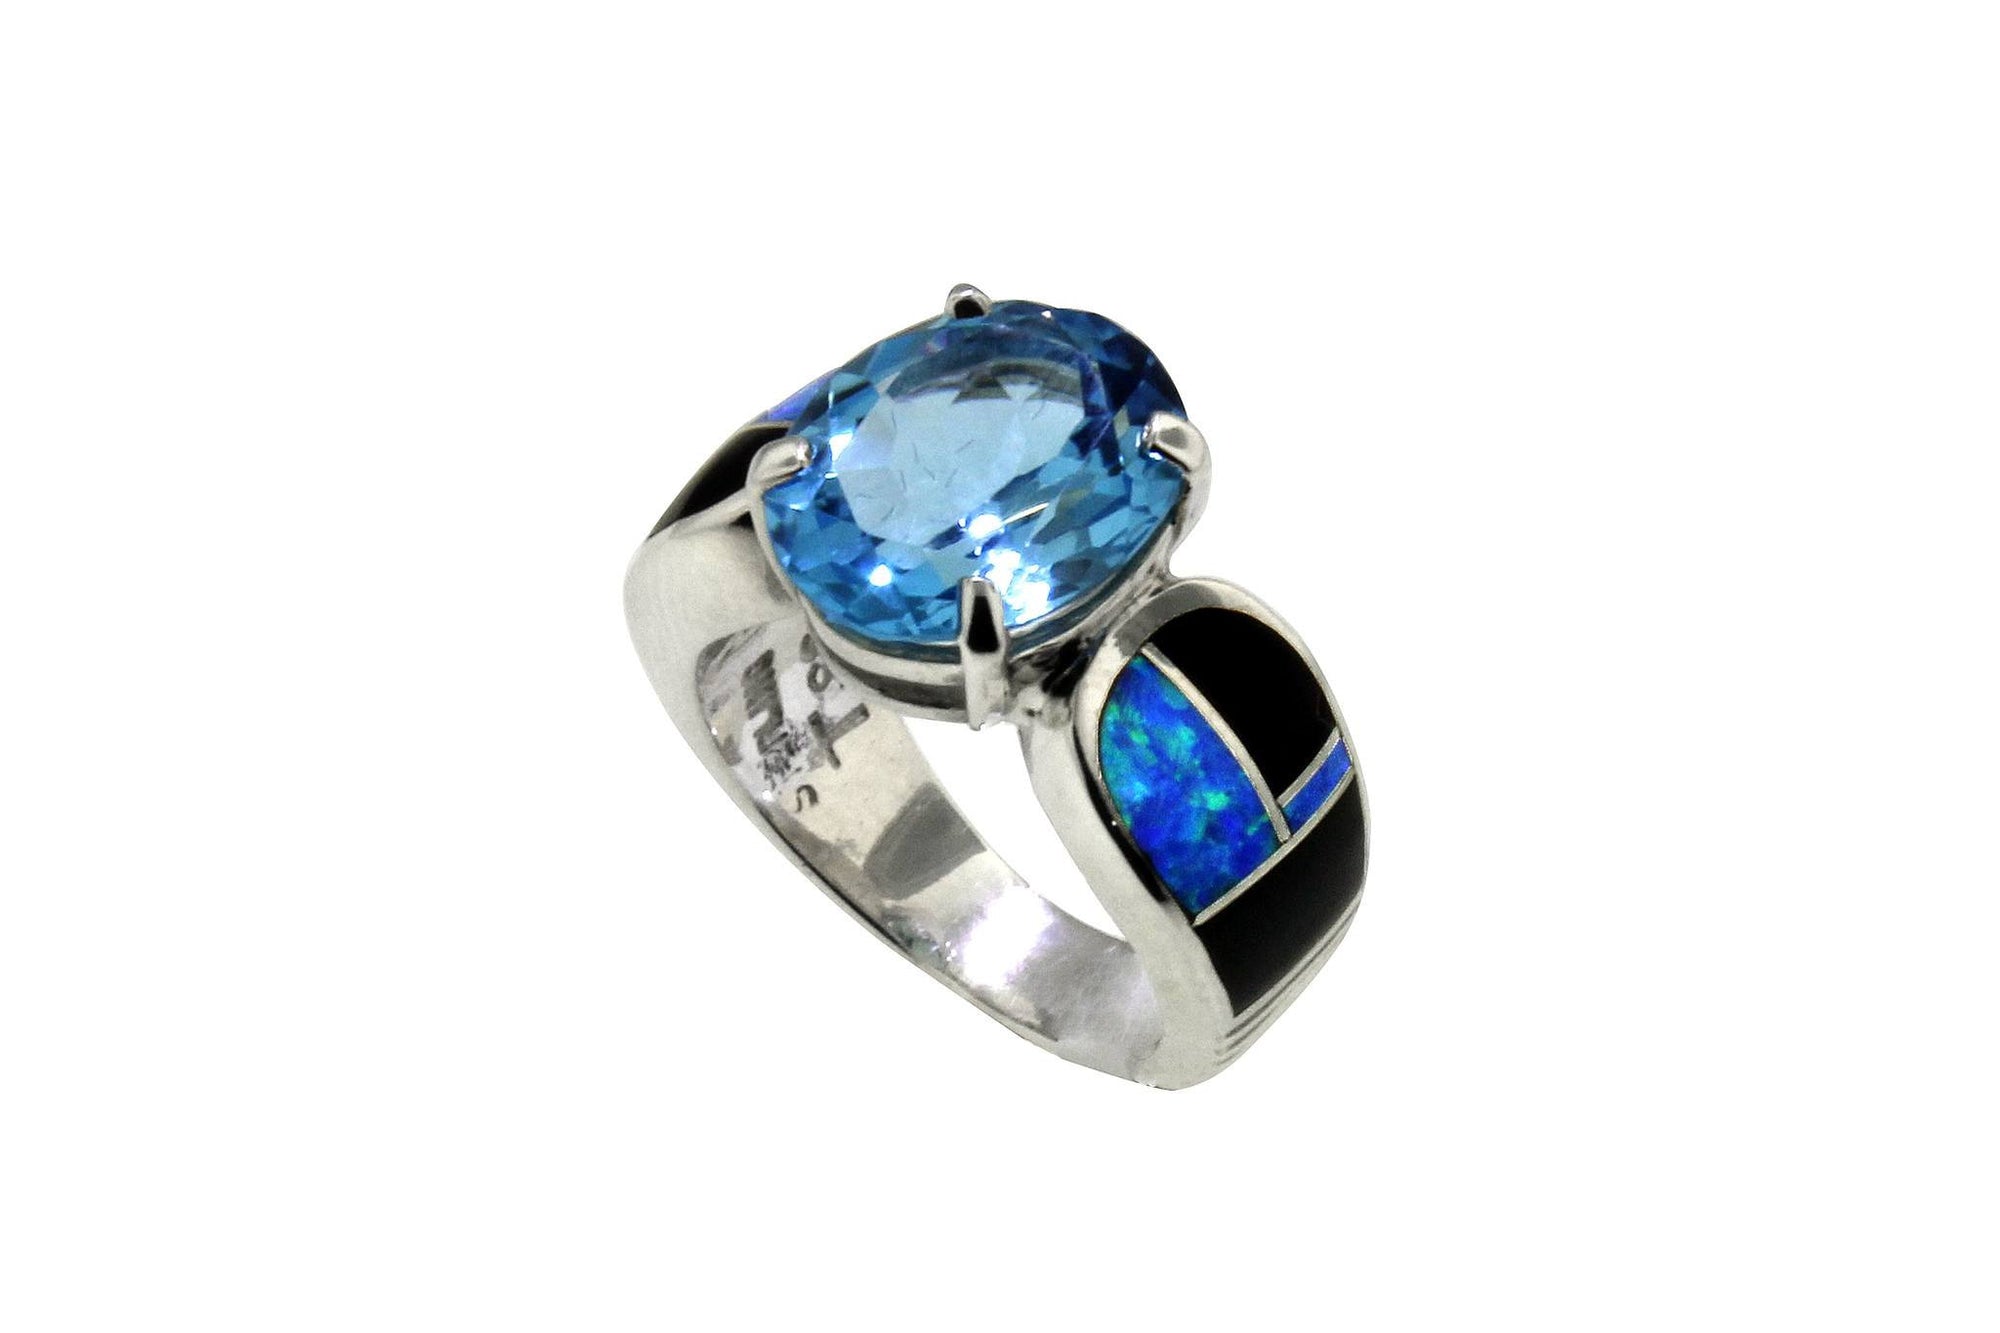 Native American Jewelry - David Rosales Blue Topaz Ring